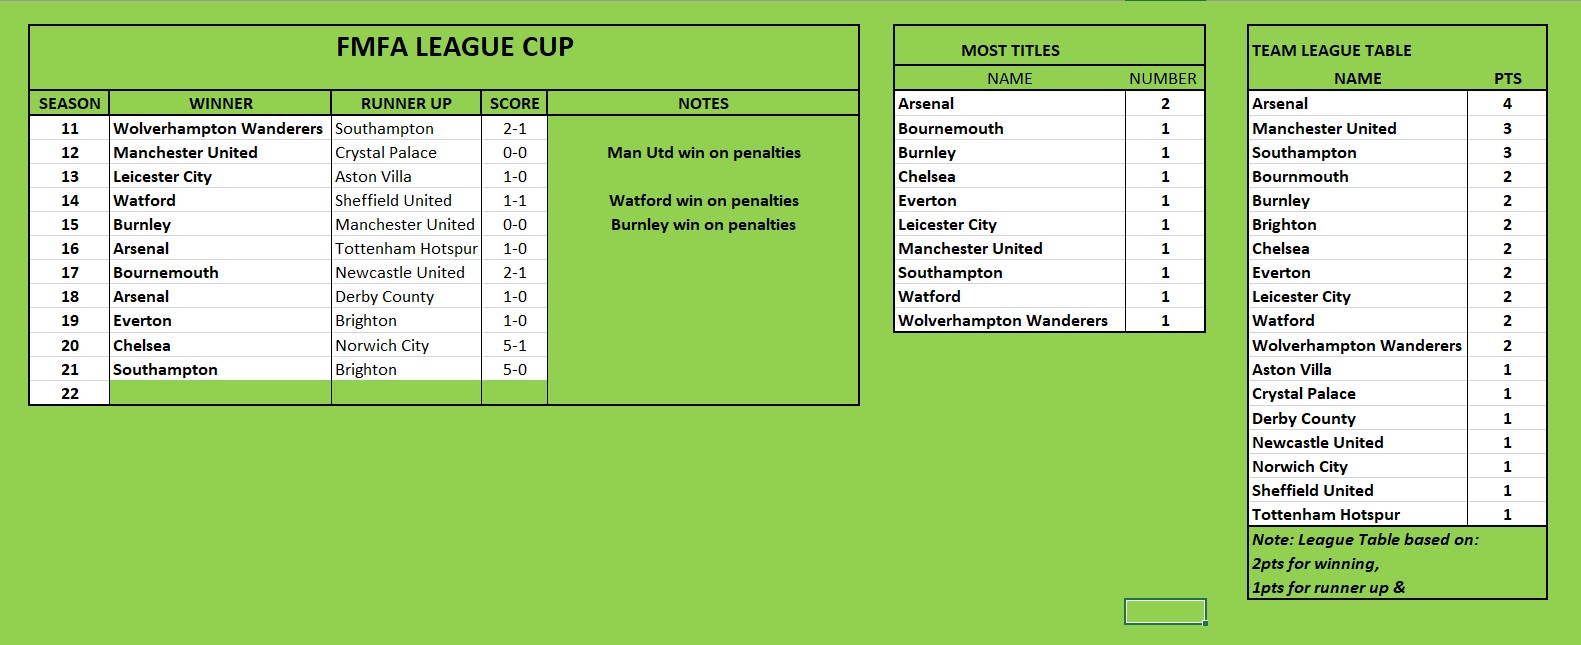 league cup history.jpg